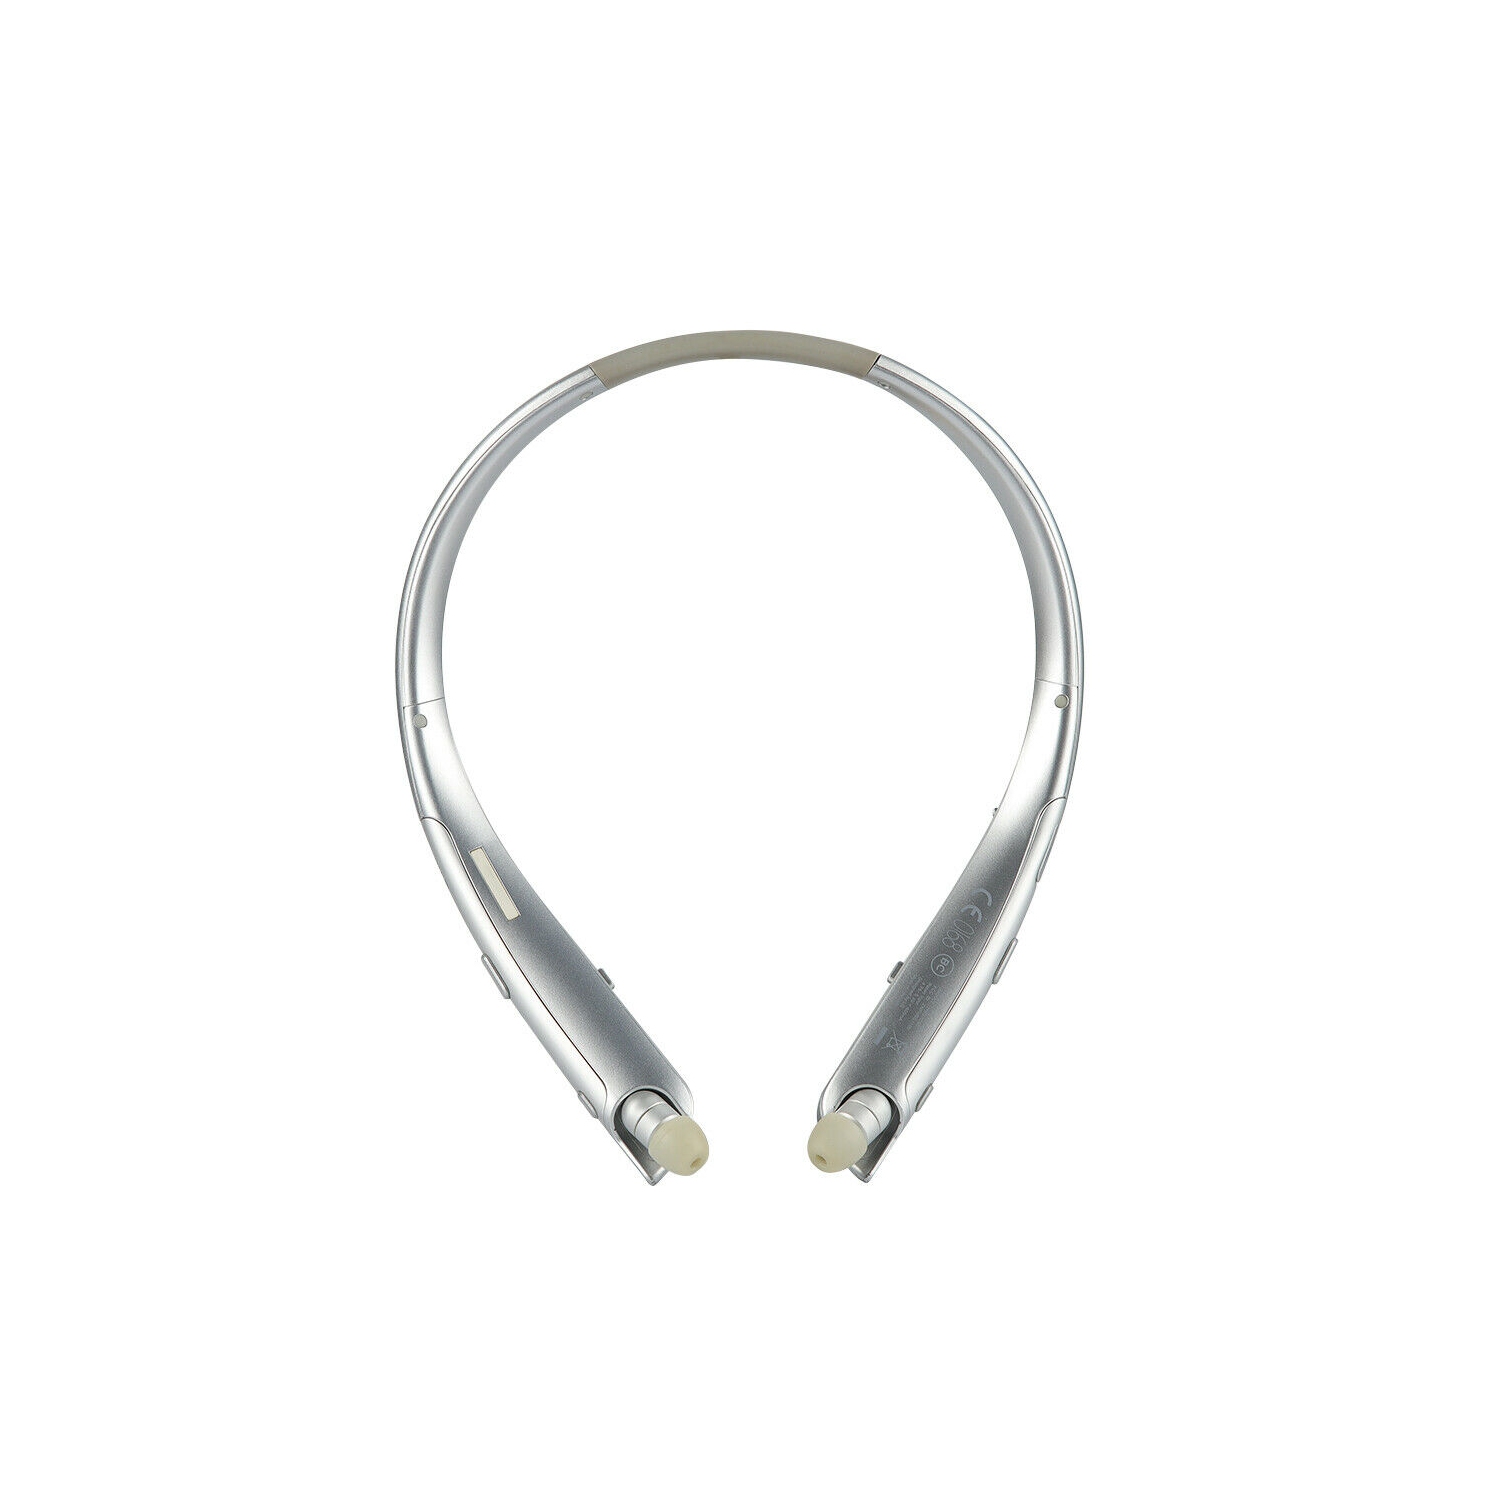 Refurbished (Good) - LG Tone Platinum Bluetooth Headset Wireless In-Ear Earphones - Silver (HBS-1100)